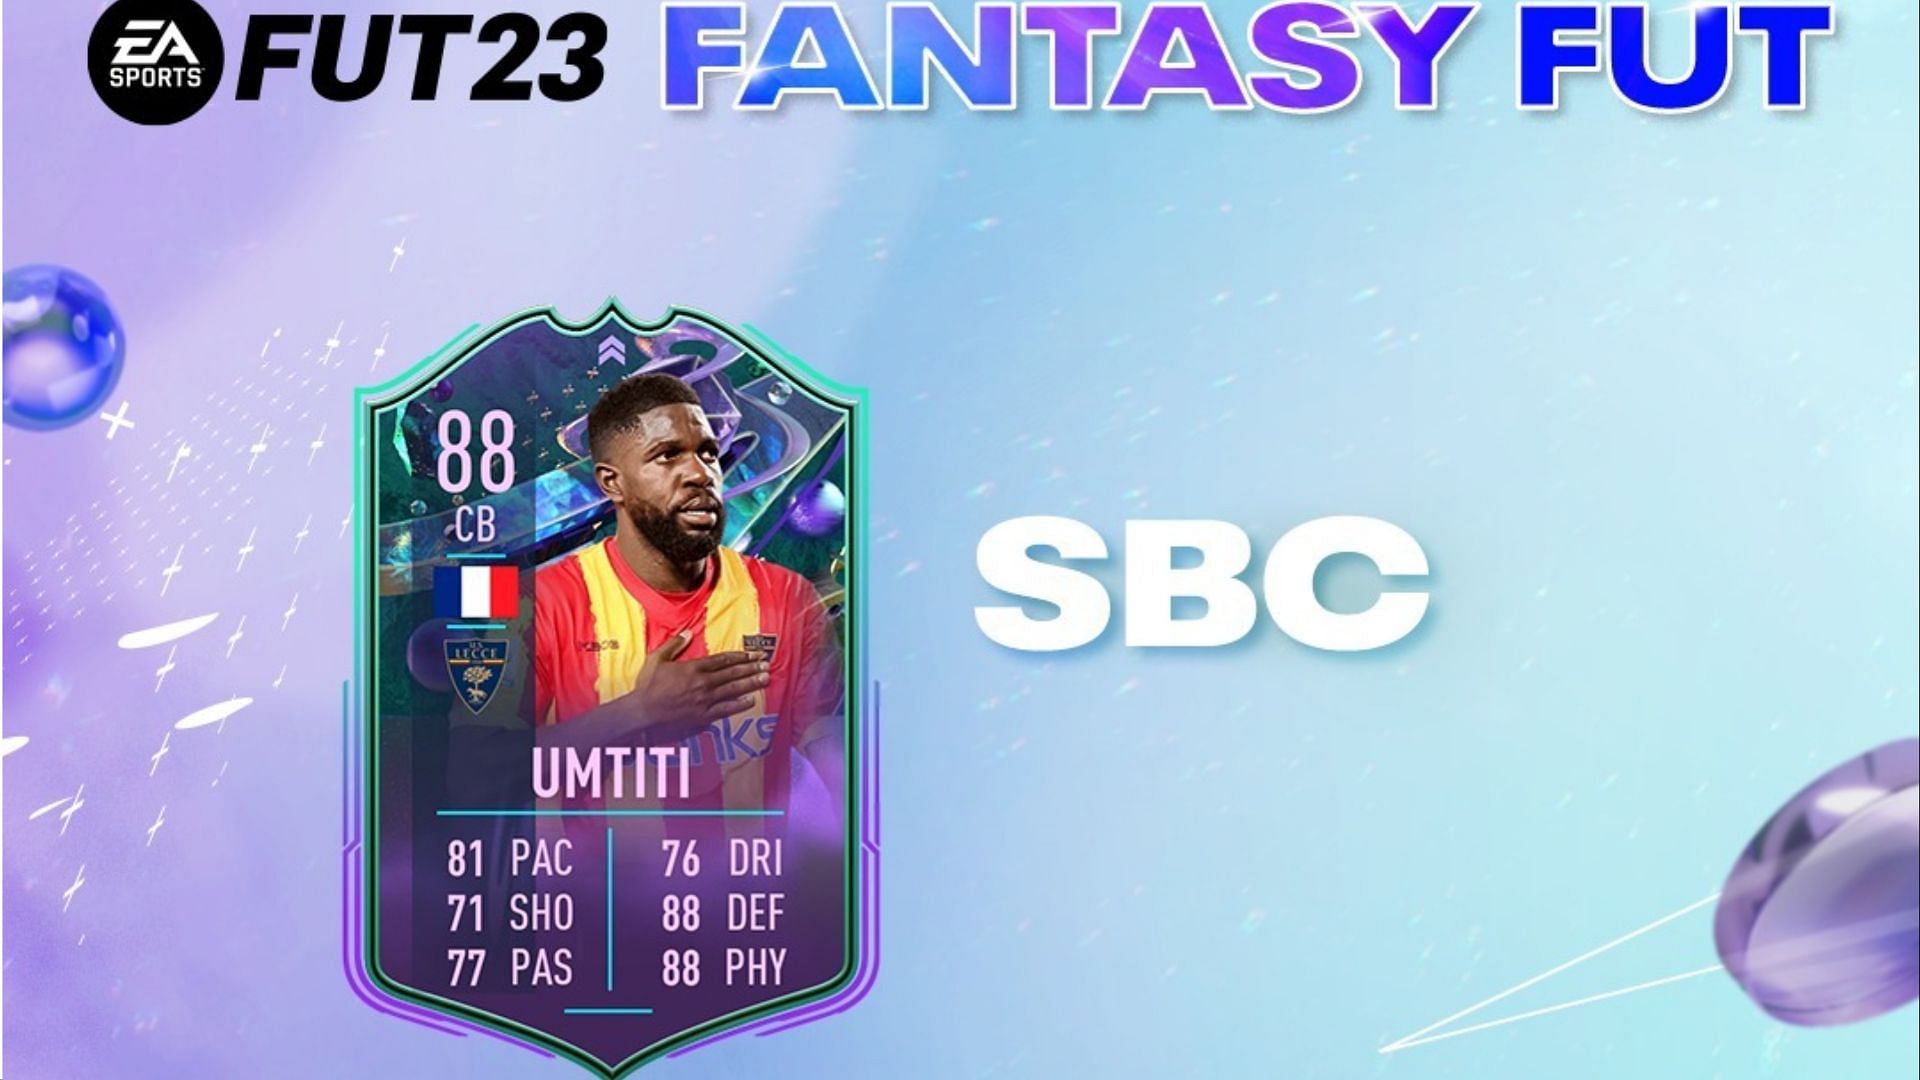 The Samuel Umtiti Fantasy FUT SBC could be a effective defensive recruitment for certain FIFA 23 players (Image via EA Sports)